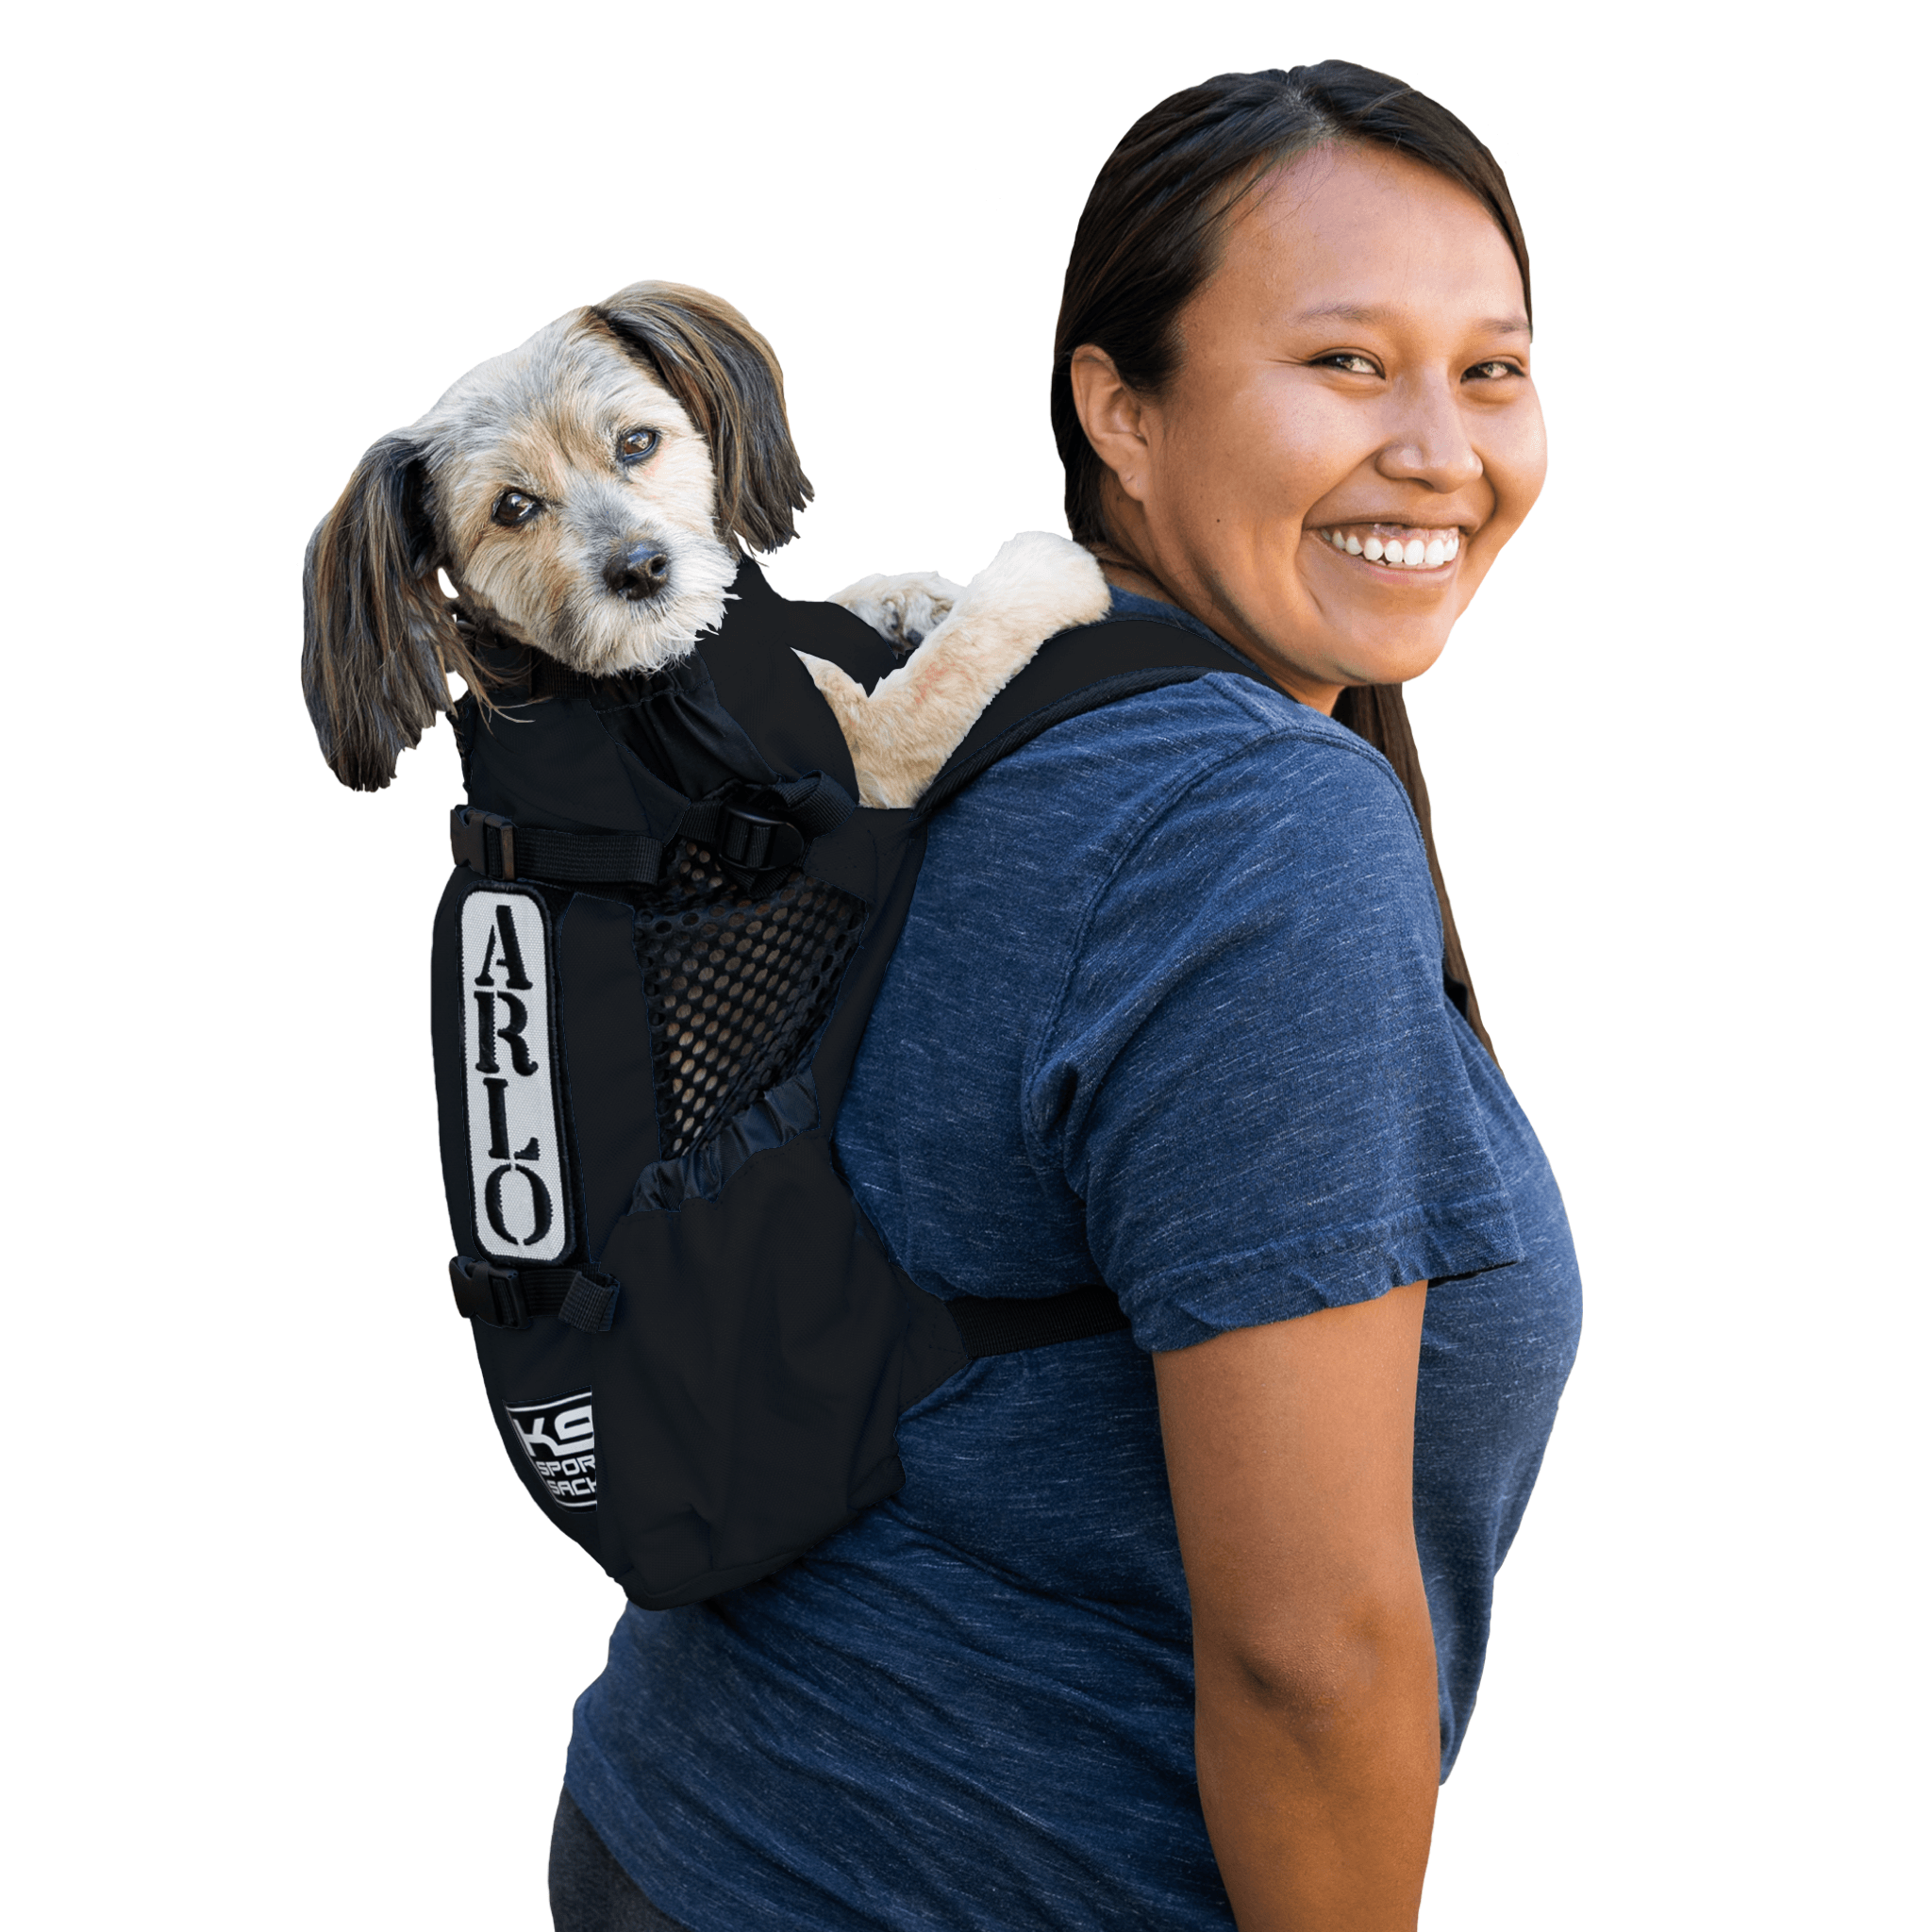 Klearance Air 2 backpack dog carrier black